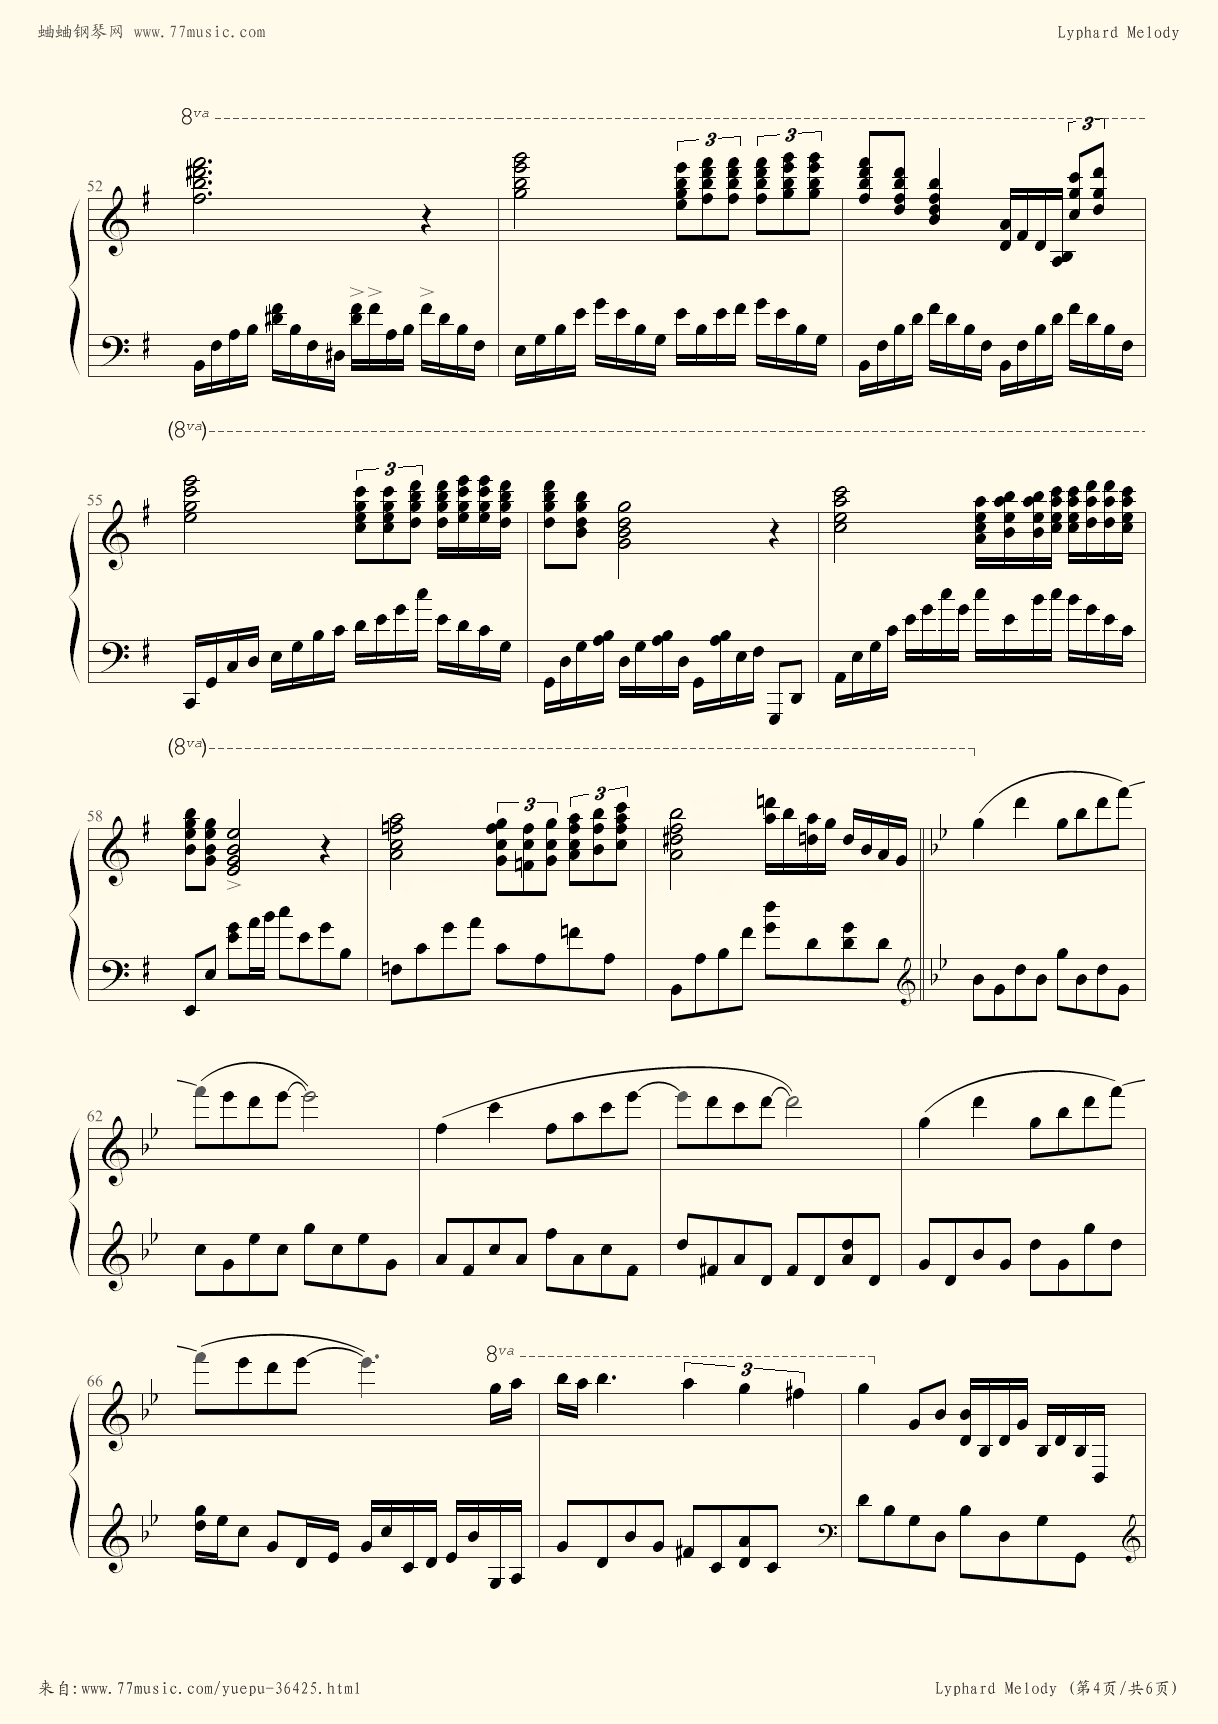 Lyphard Melody - Richard Clayderman - Flash Version2 Piano Sheet Music Free